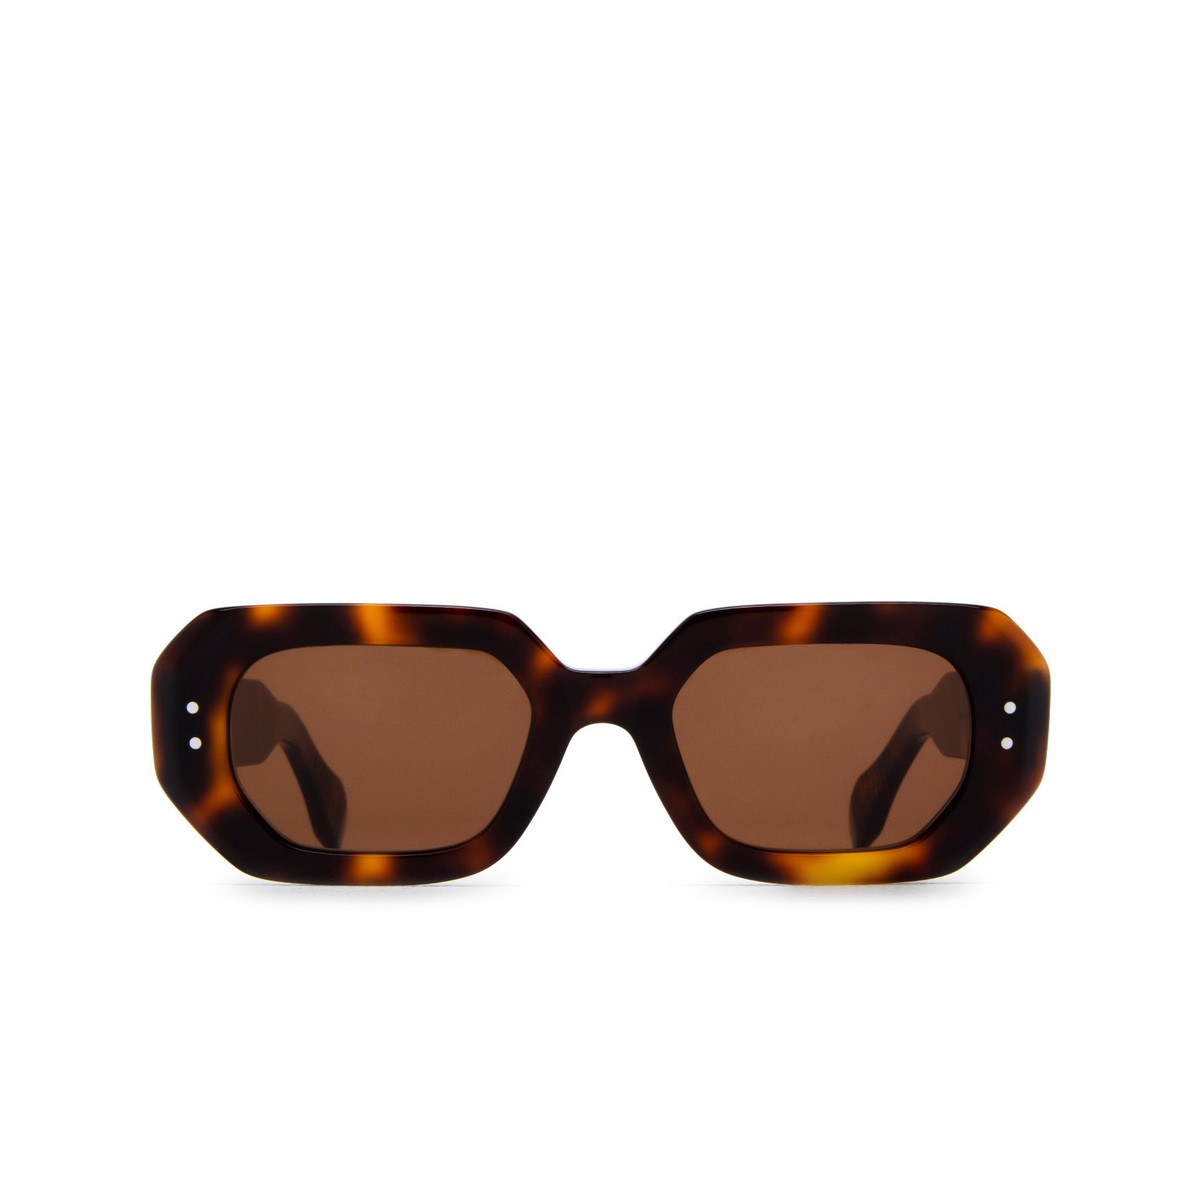 Cubitts GRIMALDI Sunglasses GRI-R-DAR Dark Turtle - front view